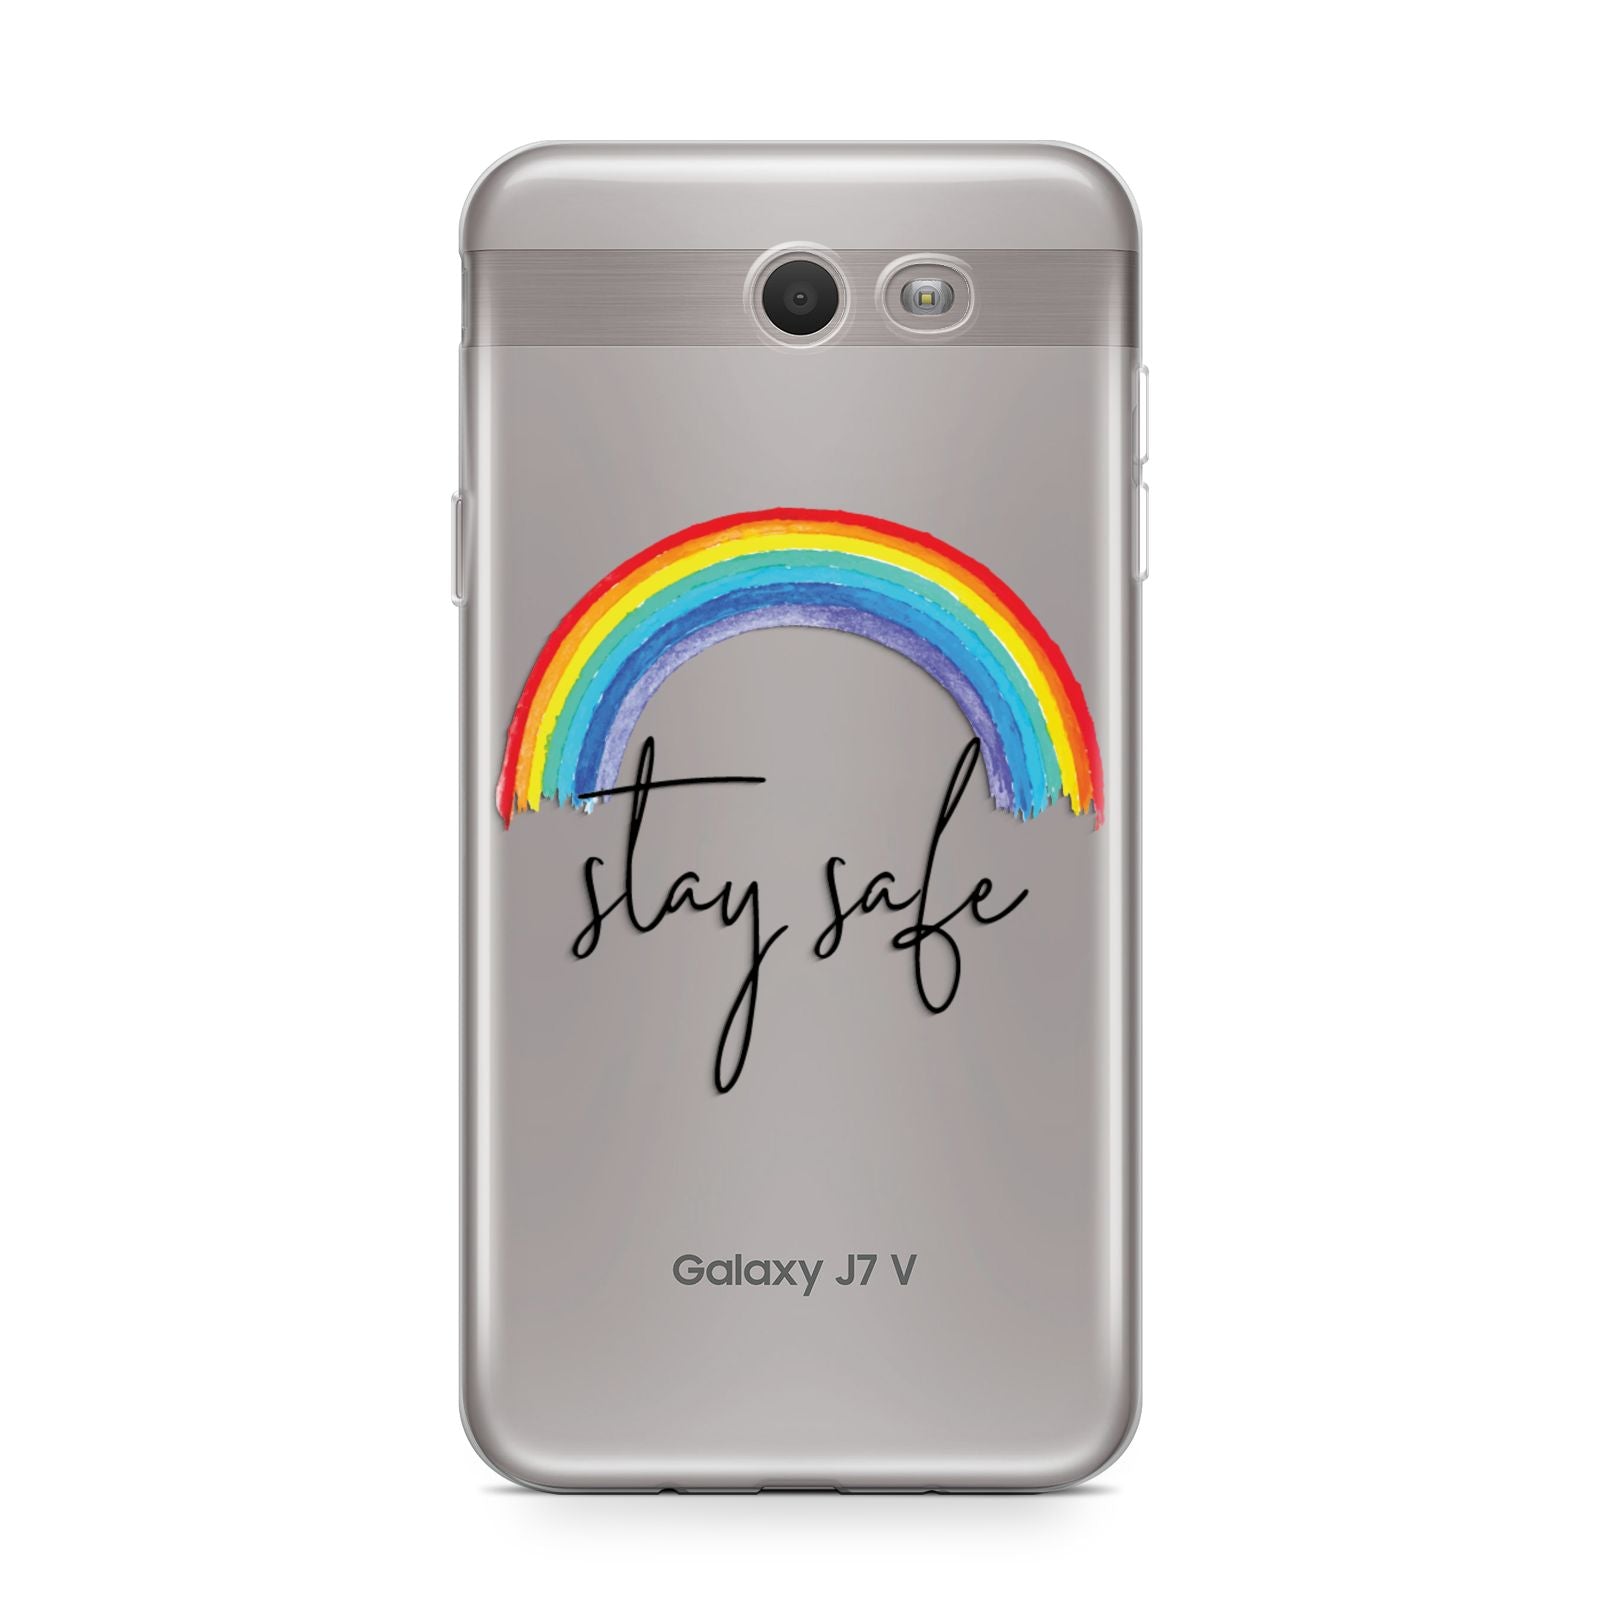 Stay Safe Rainbow Samsung Galaxy J7 2017 Case